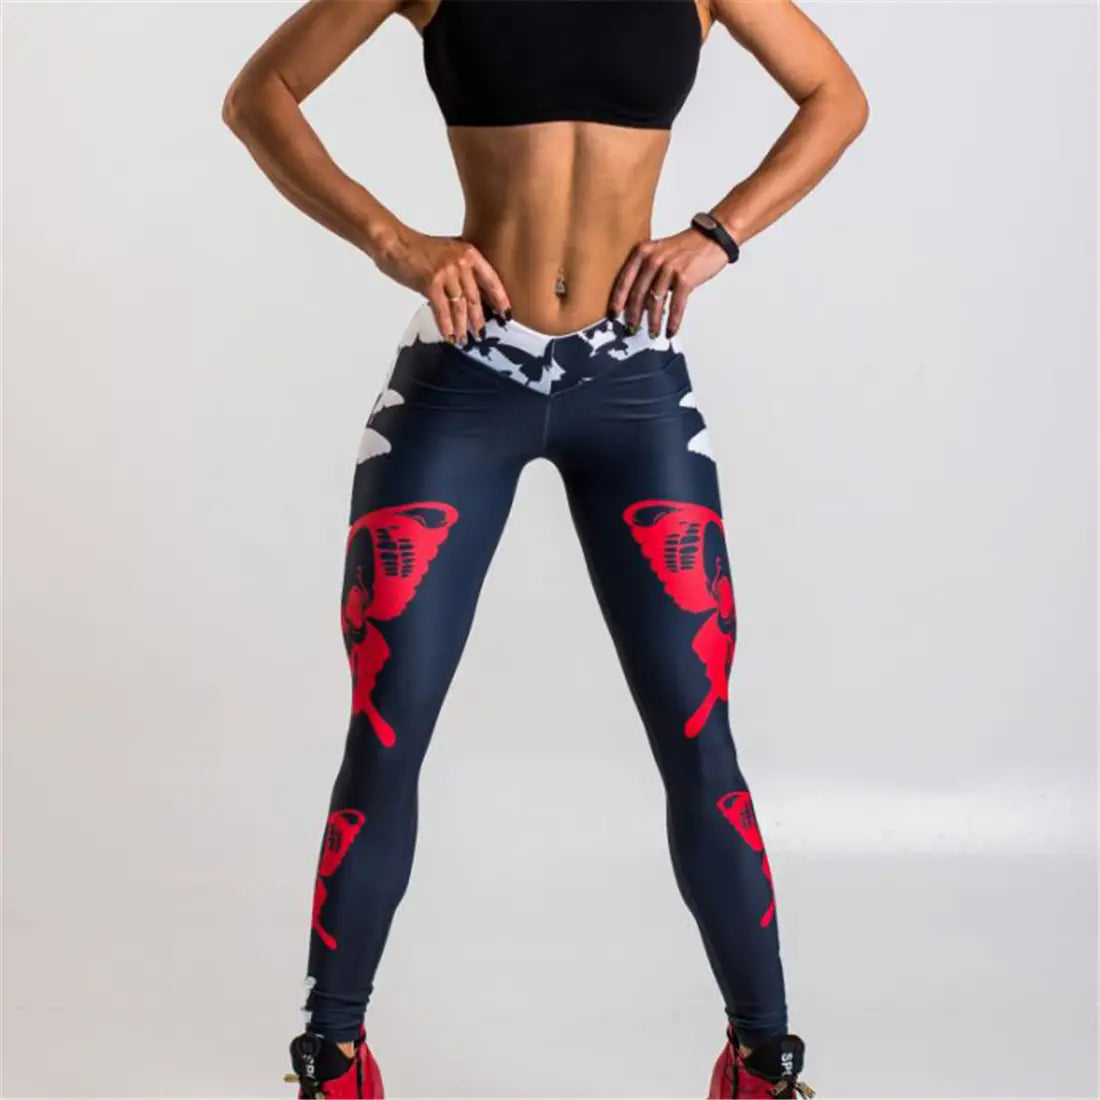 Lovemi - Red Butterfly Print Leggings Women’s Sports Yoga